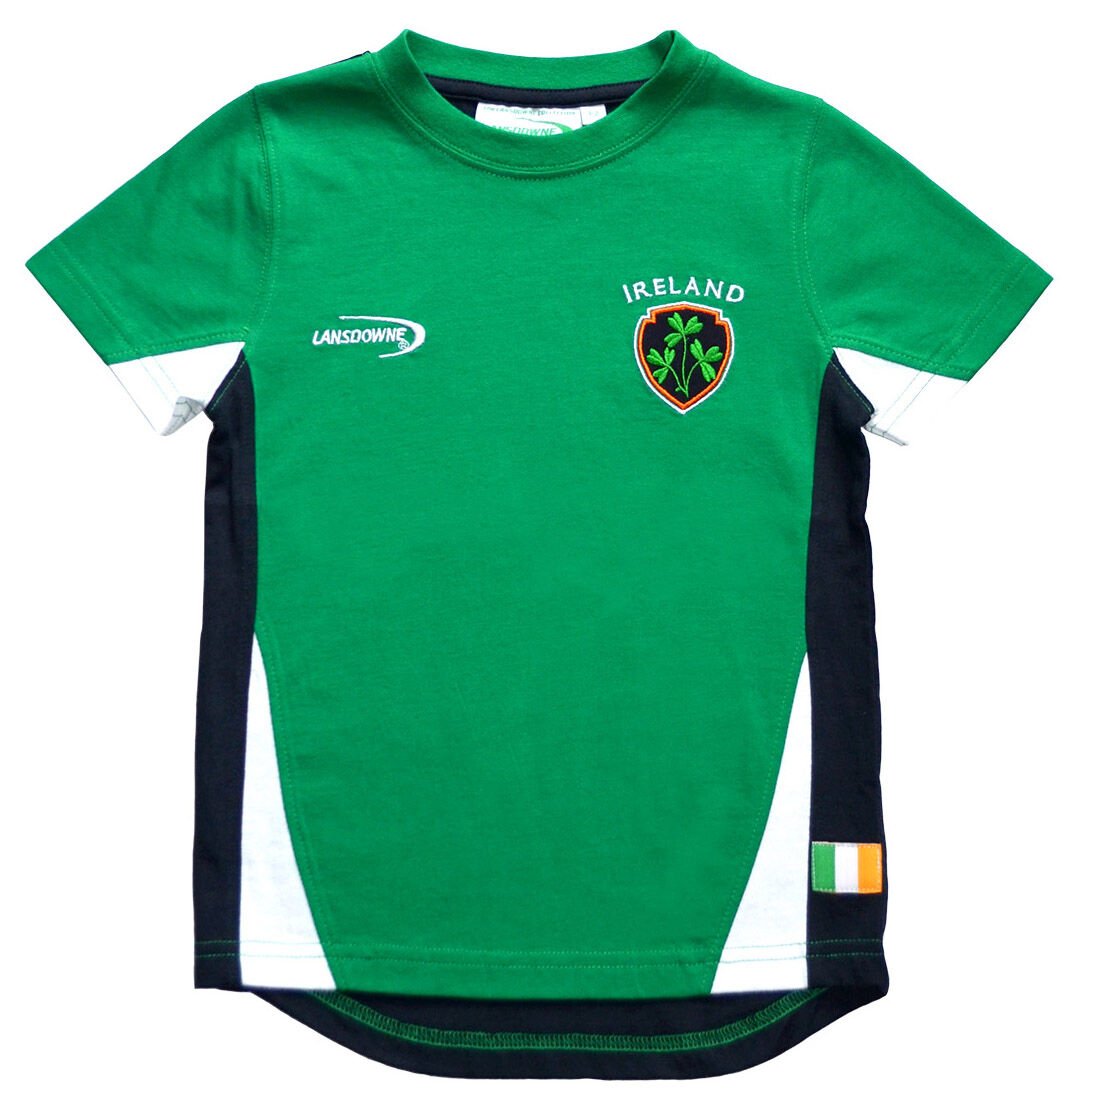 REPUBLIC OF IRELAND Football Personalised Baby/Child T-Shirt 